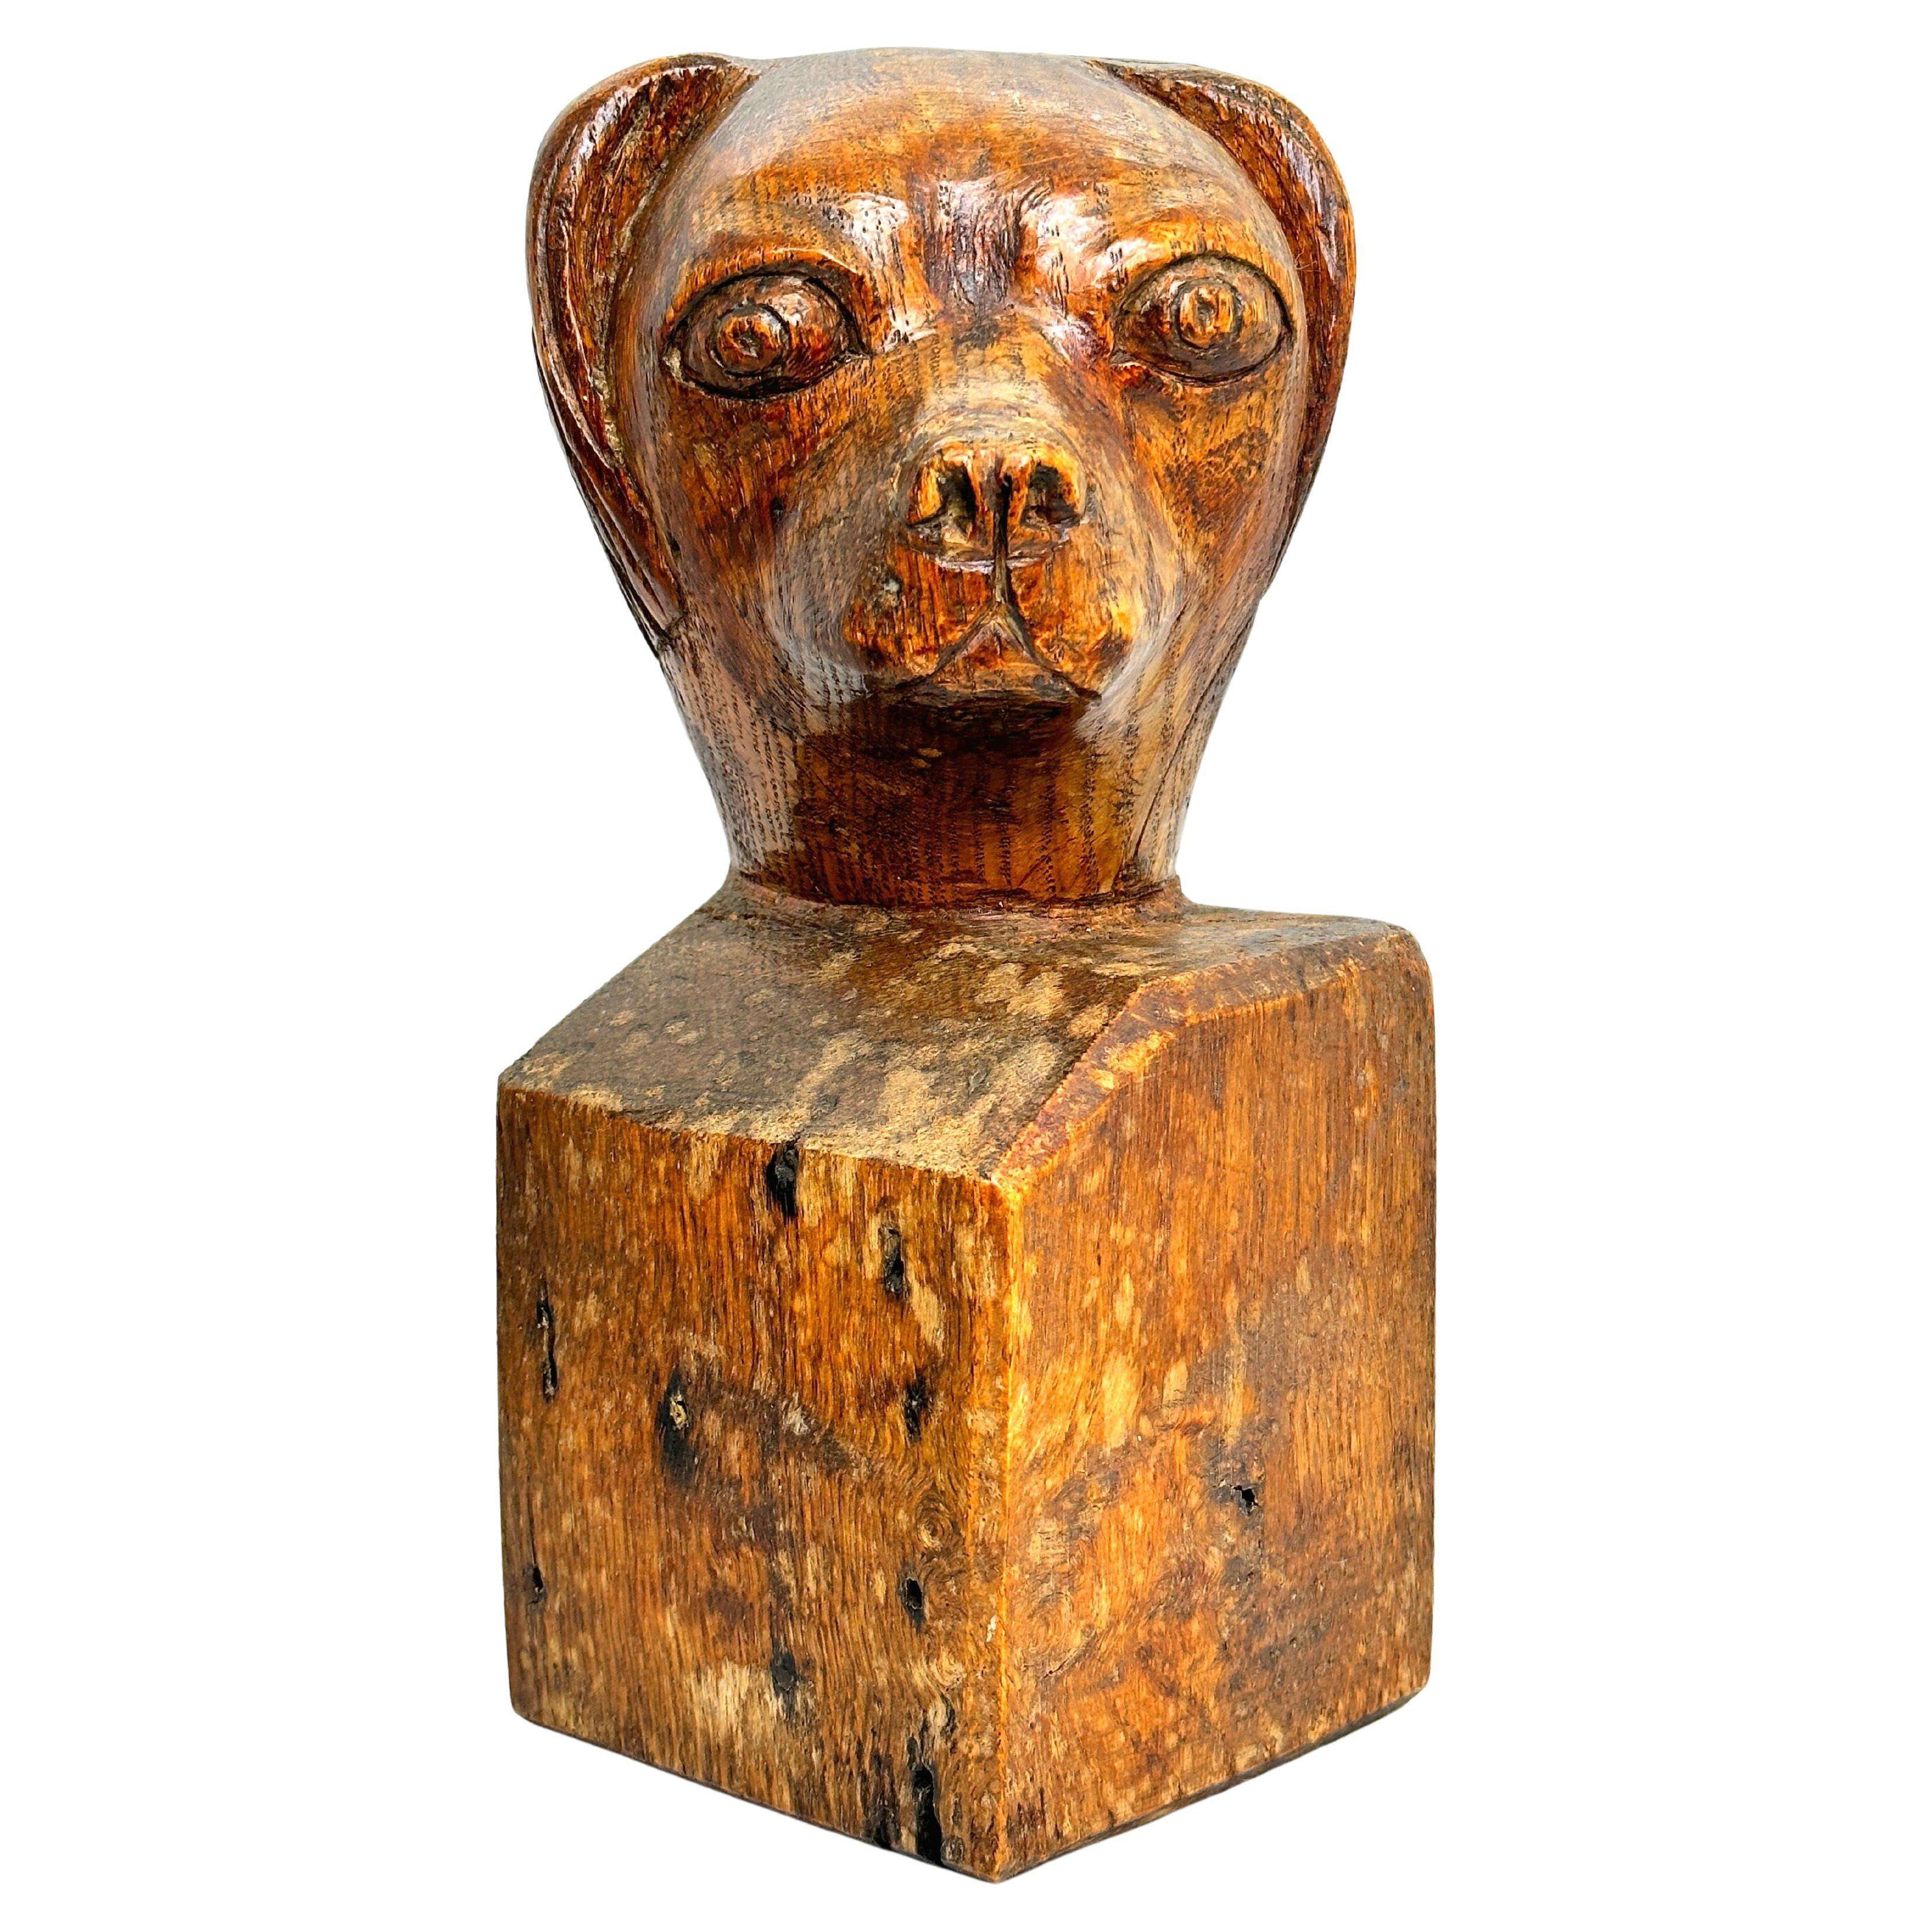 Carved Wooden Dog Head Statue Sculpture Bust, Vintage Austria, circa 1910s